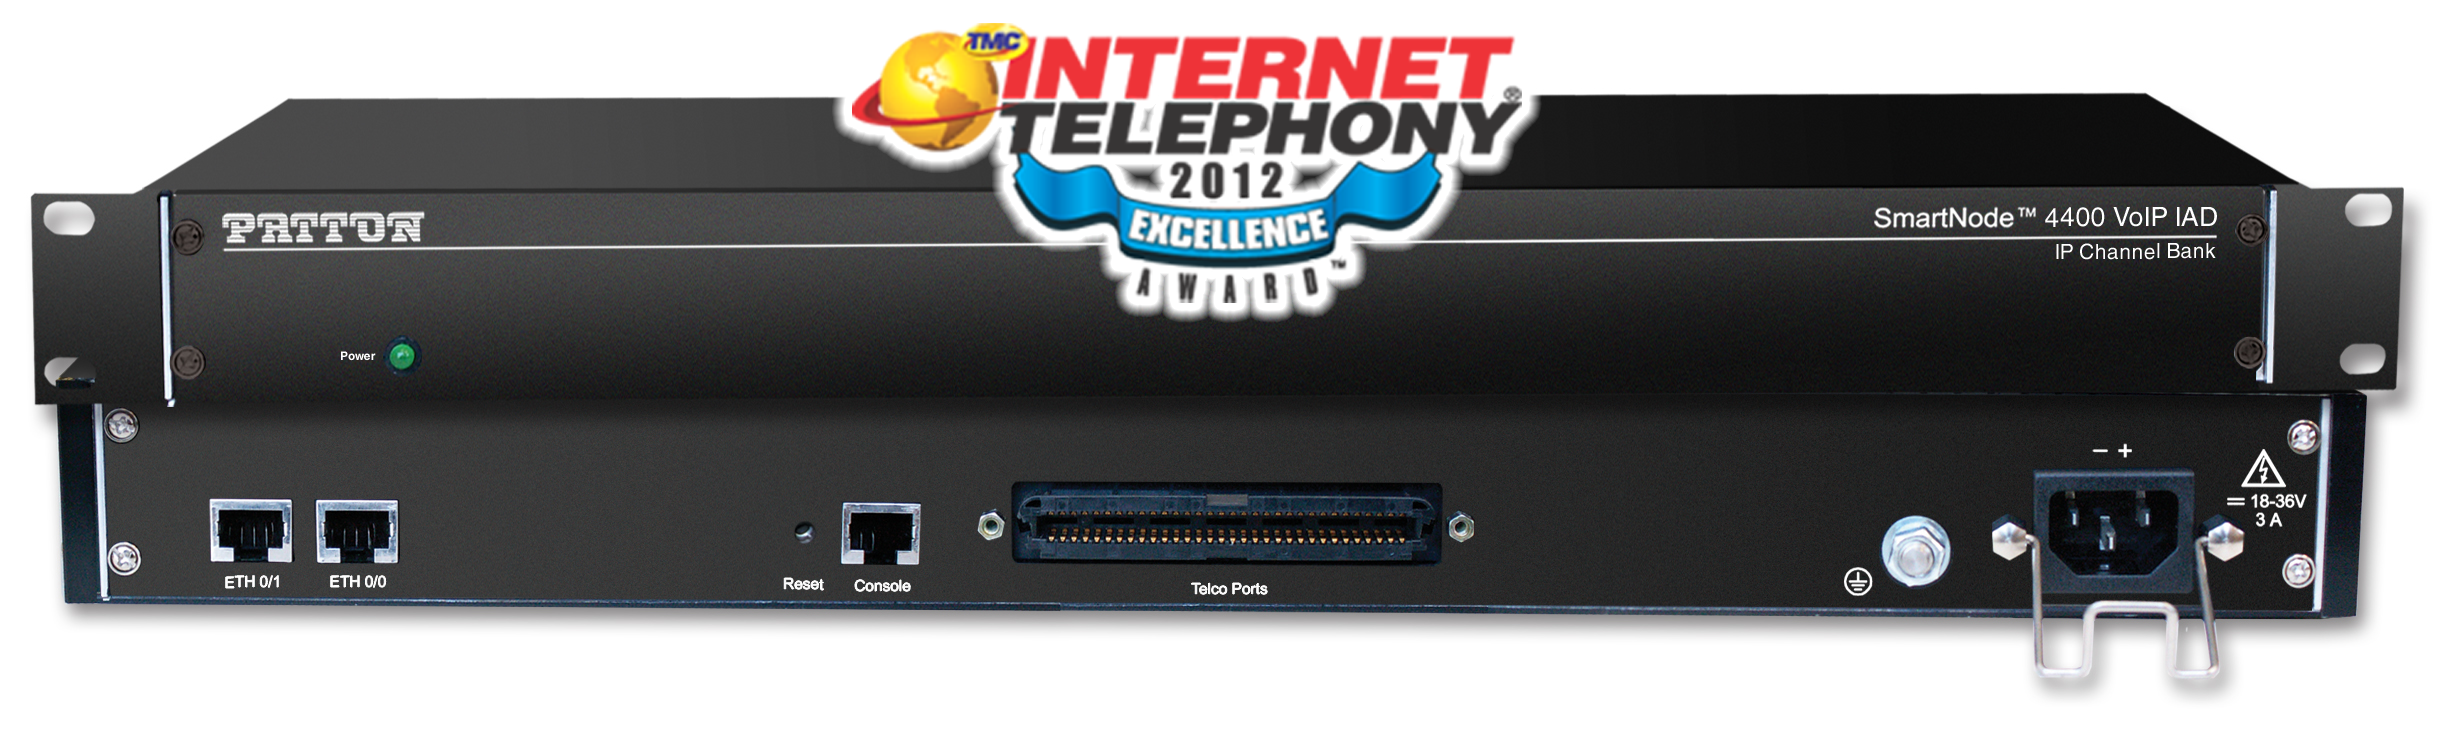 Patton SmartNode SN4424/JO/UI IpChannelBank Analog VoIP Router | 24 FXO ports